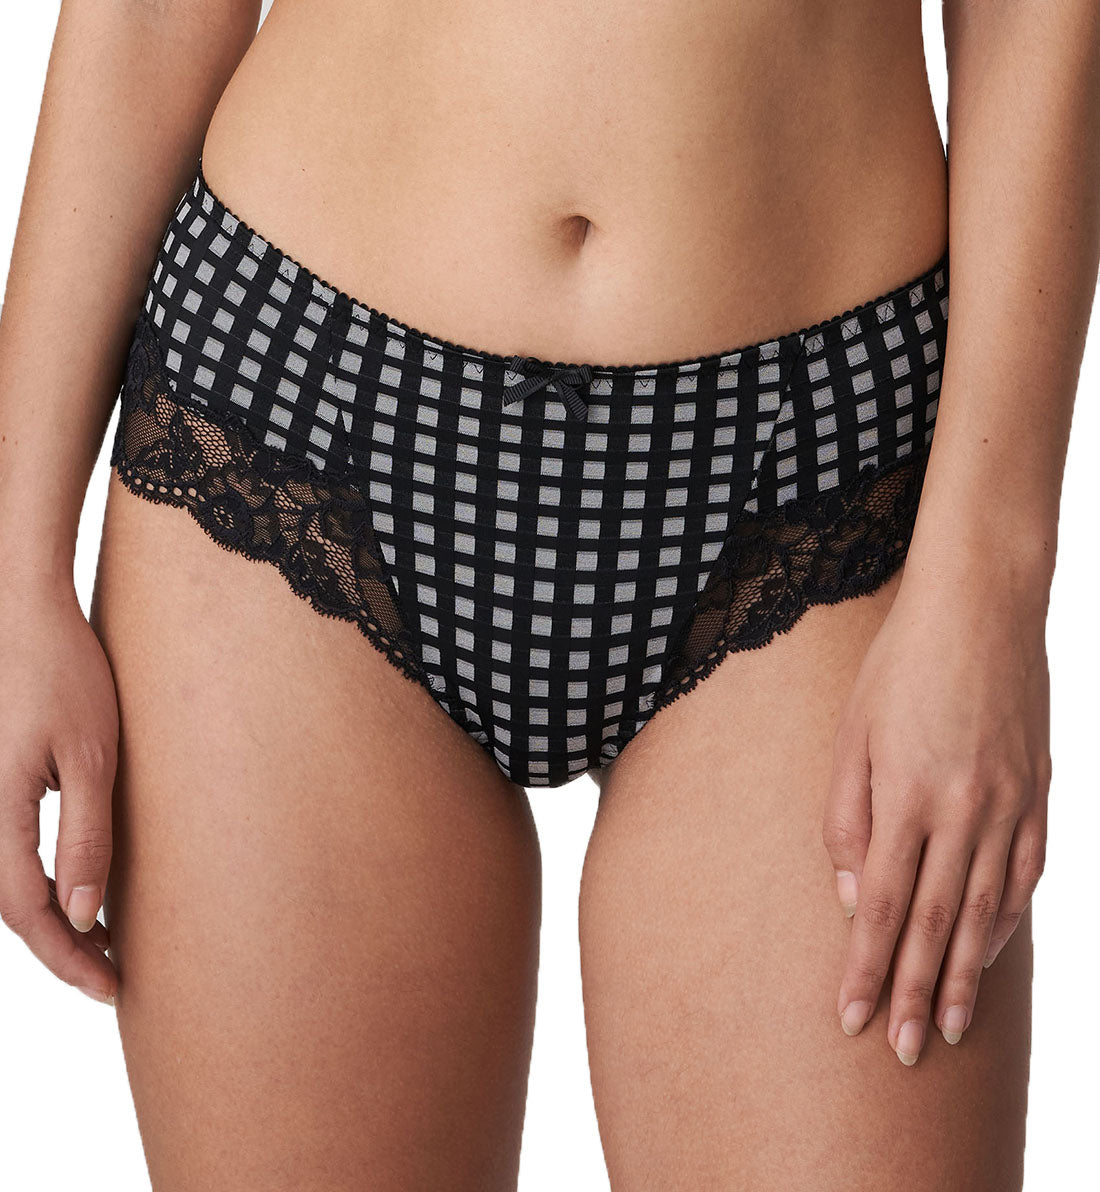 PrimaDonna Madison Matching Hotpants Panty (0562127),Small,Crystal Black - Crystal Black,Small